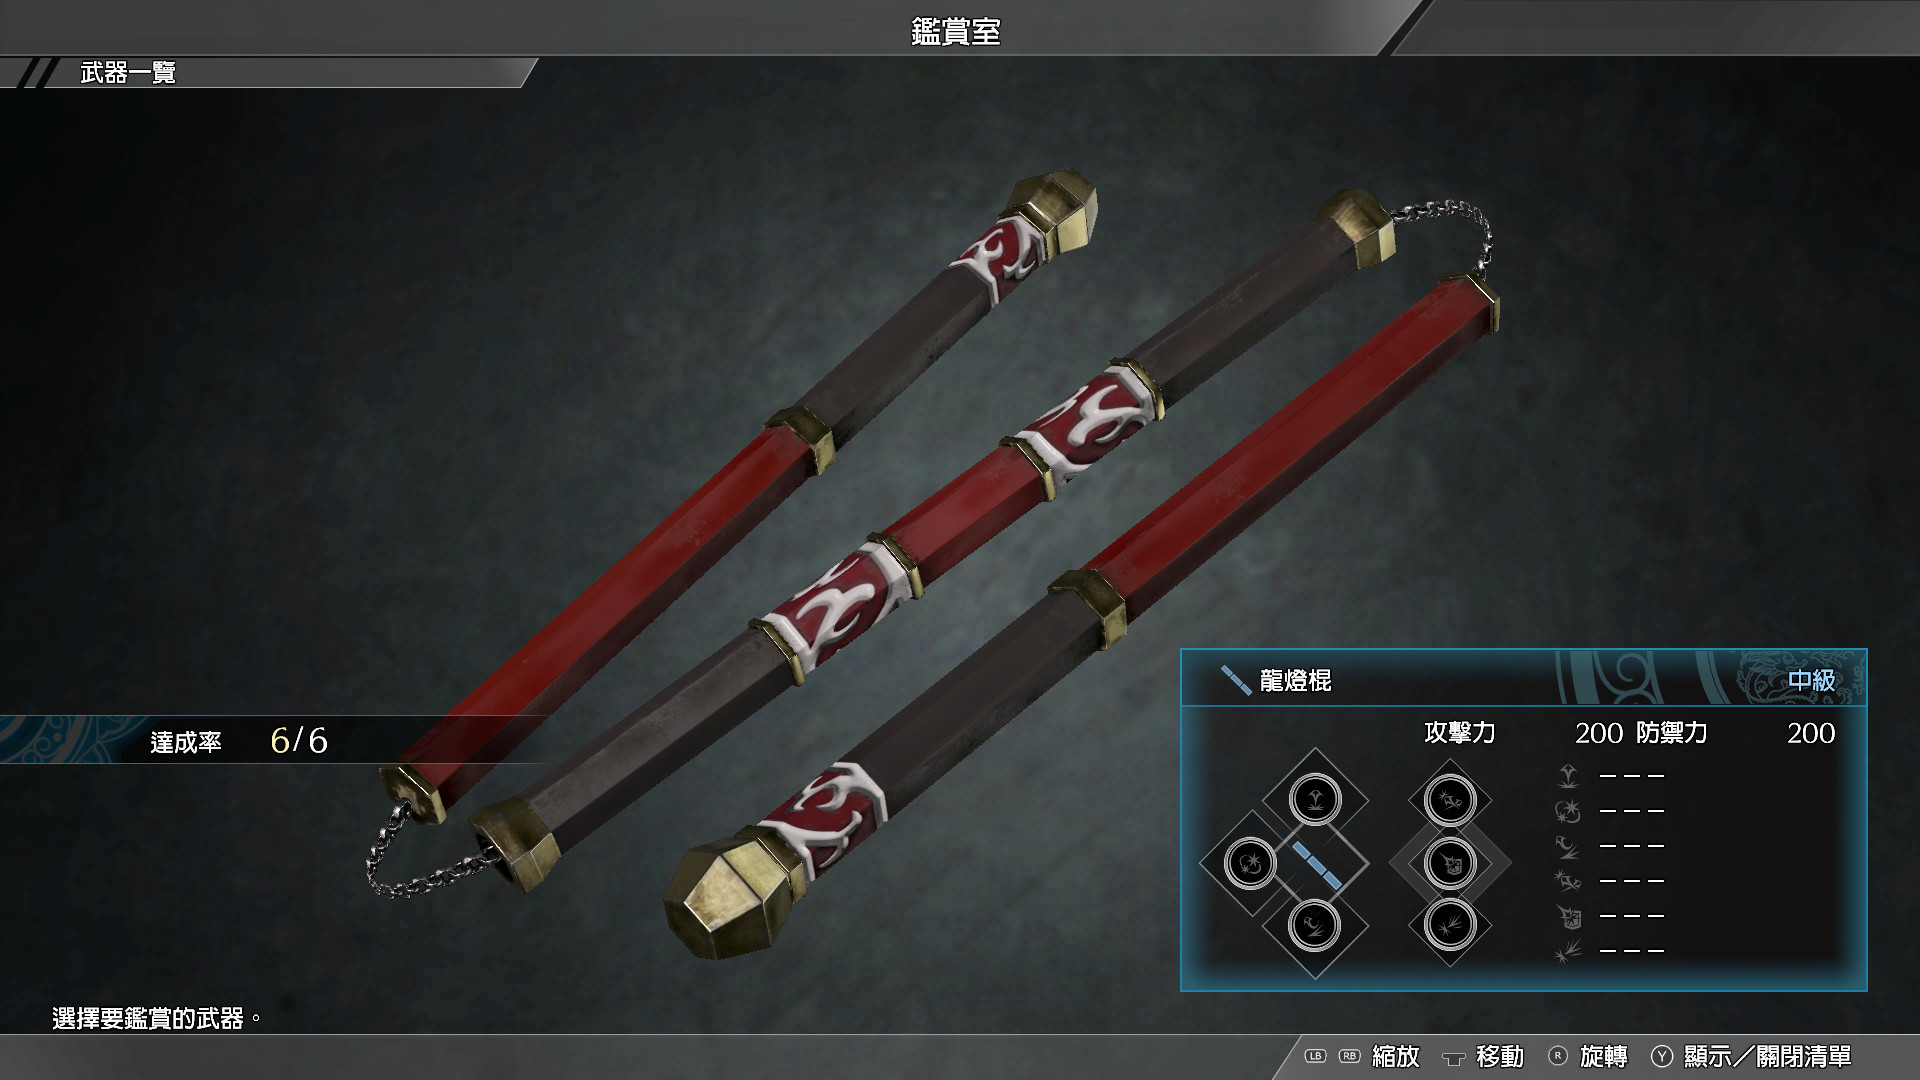 DYNASTY WARRIORS 9: Additional Weapon "Tripartite Nunchucks" / 追加武器「三結棍」 Featured Screenshot #1